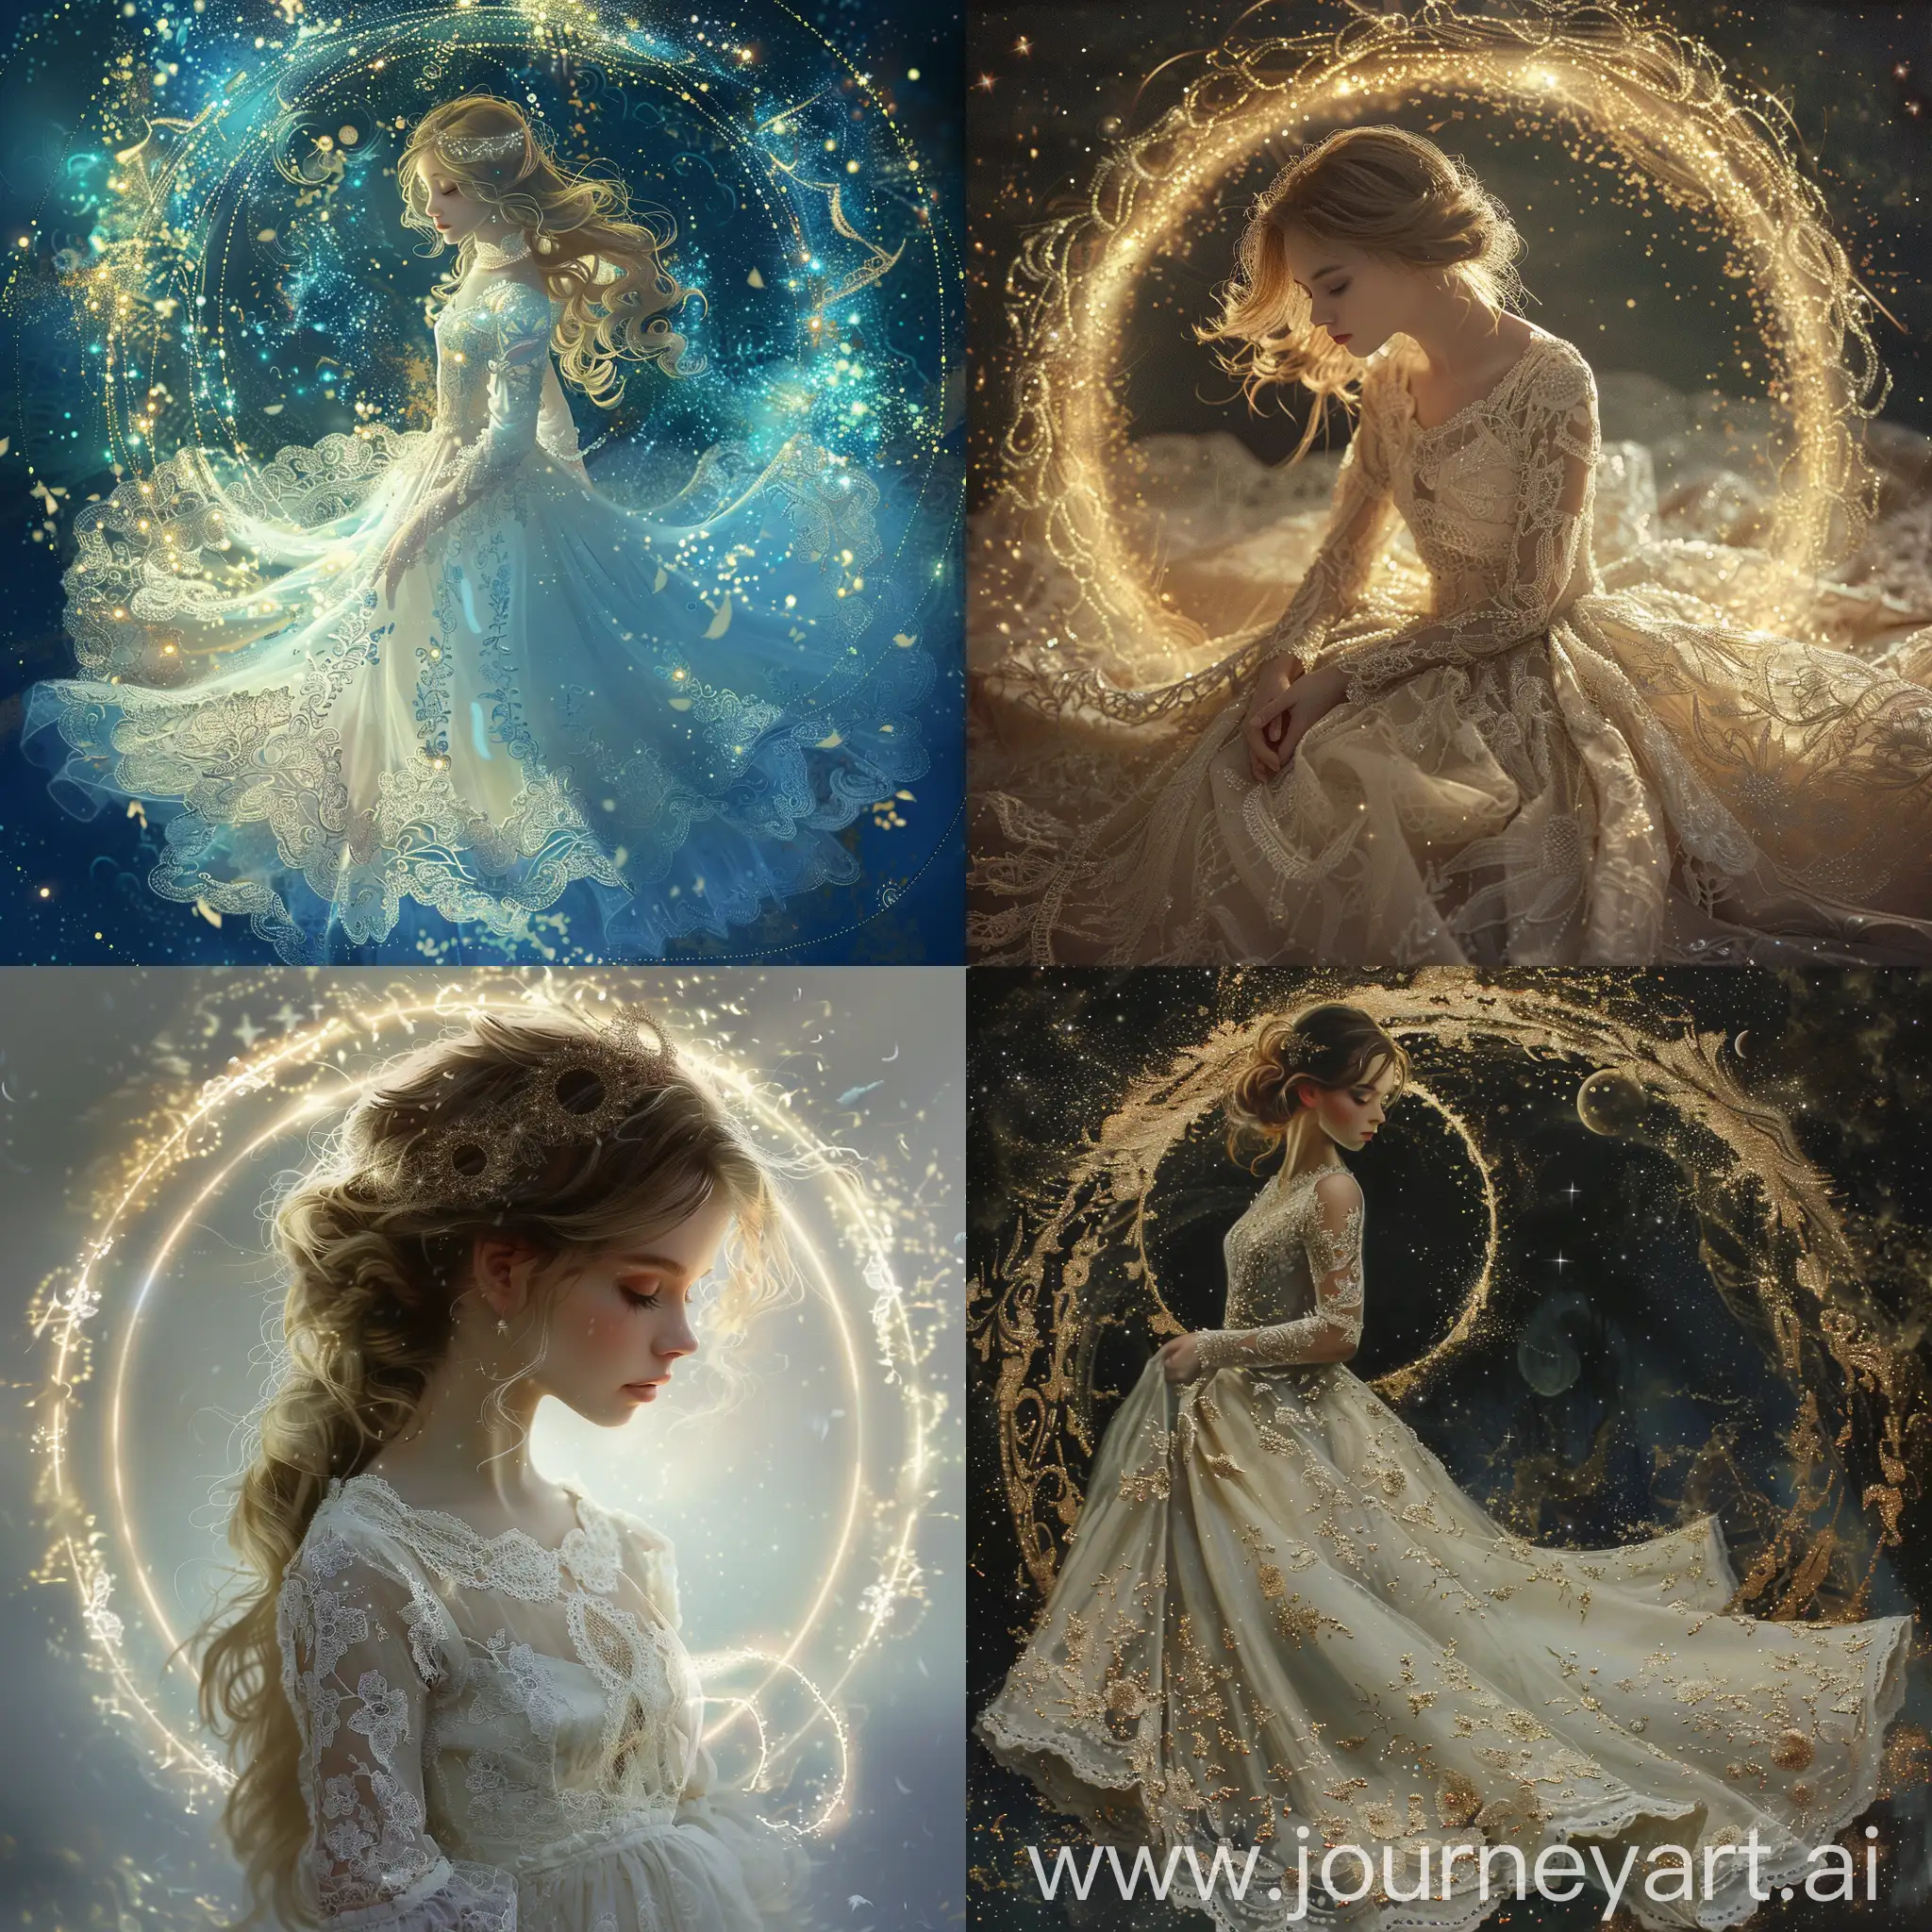 Enchanting-Lace-Princess-in-a-Magical-World